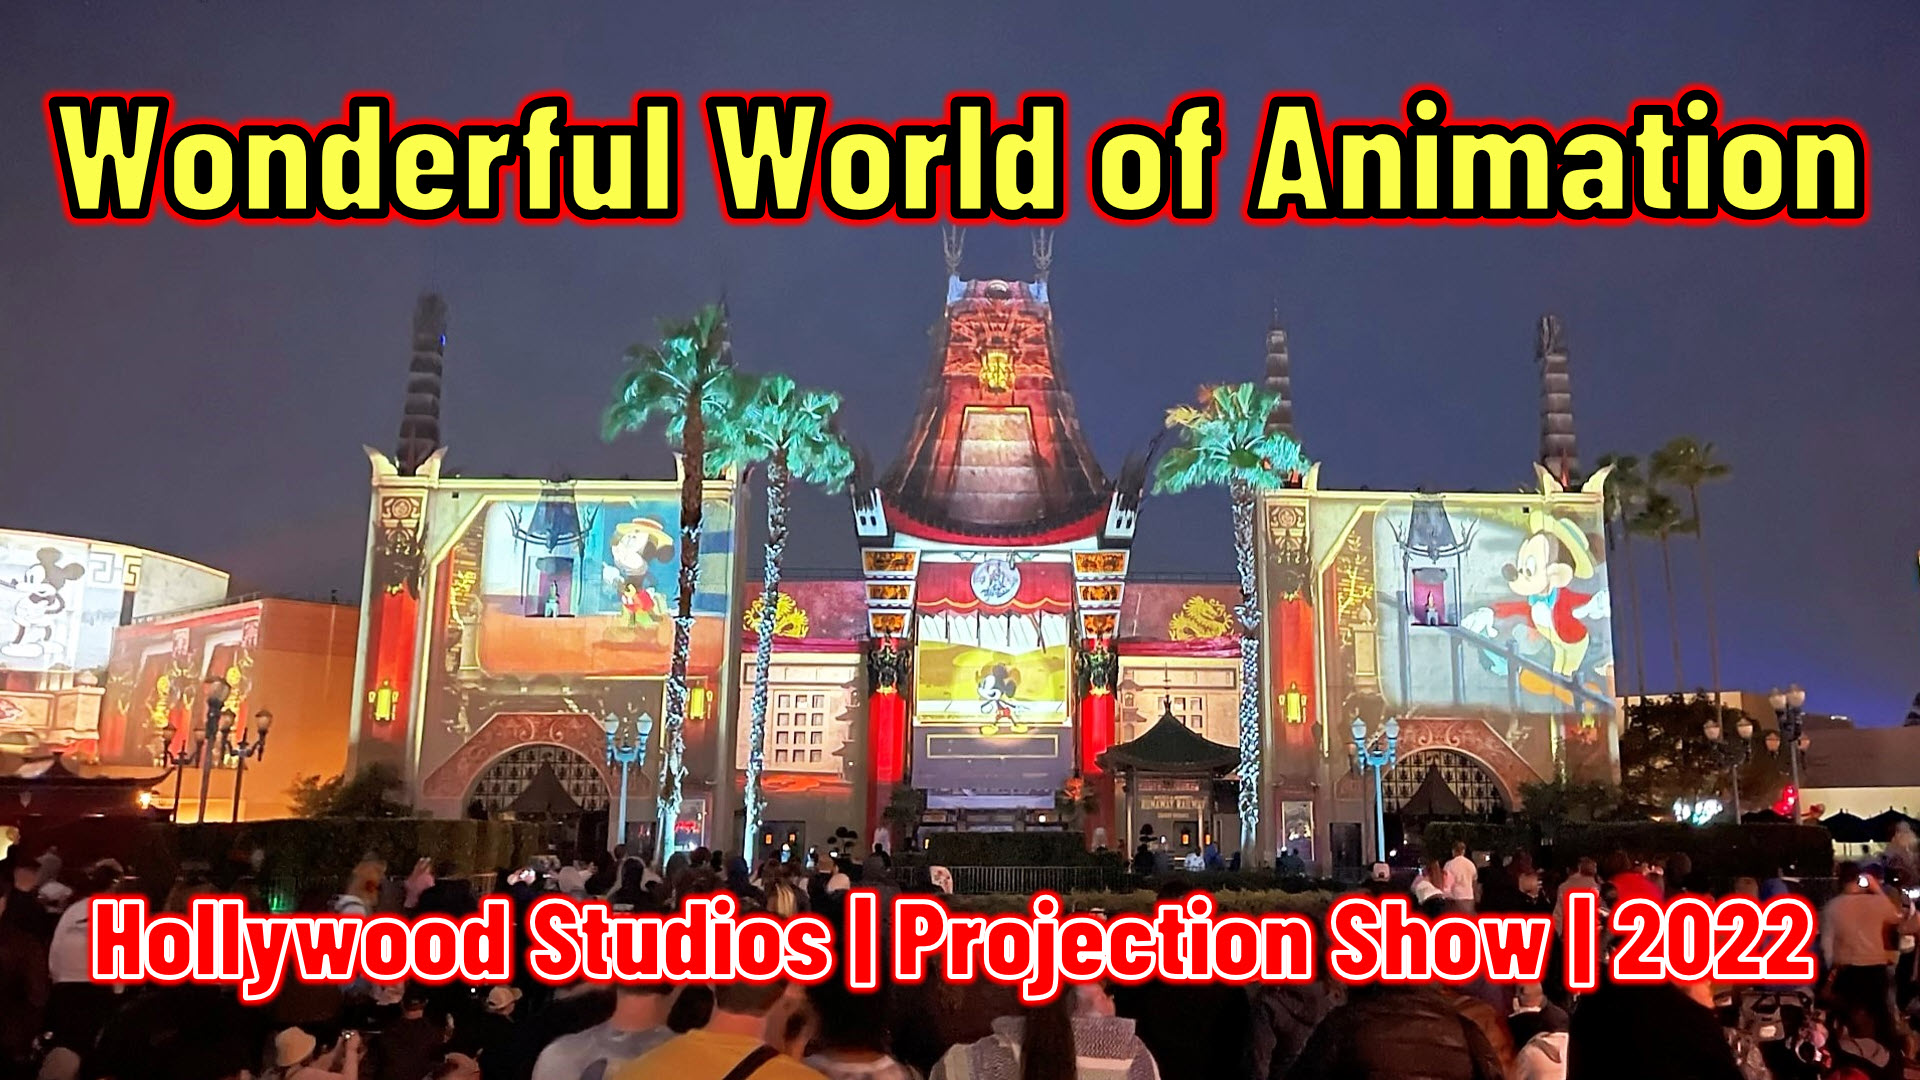 Wonderful World of Animation | Walt Disney World | Hollywood Studios | Projection Show | 2022